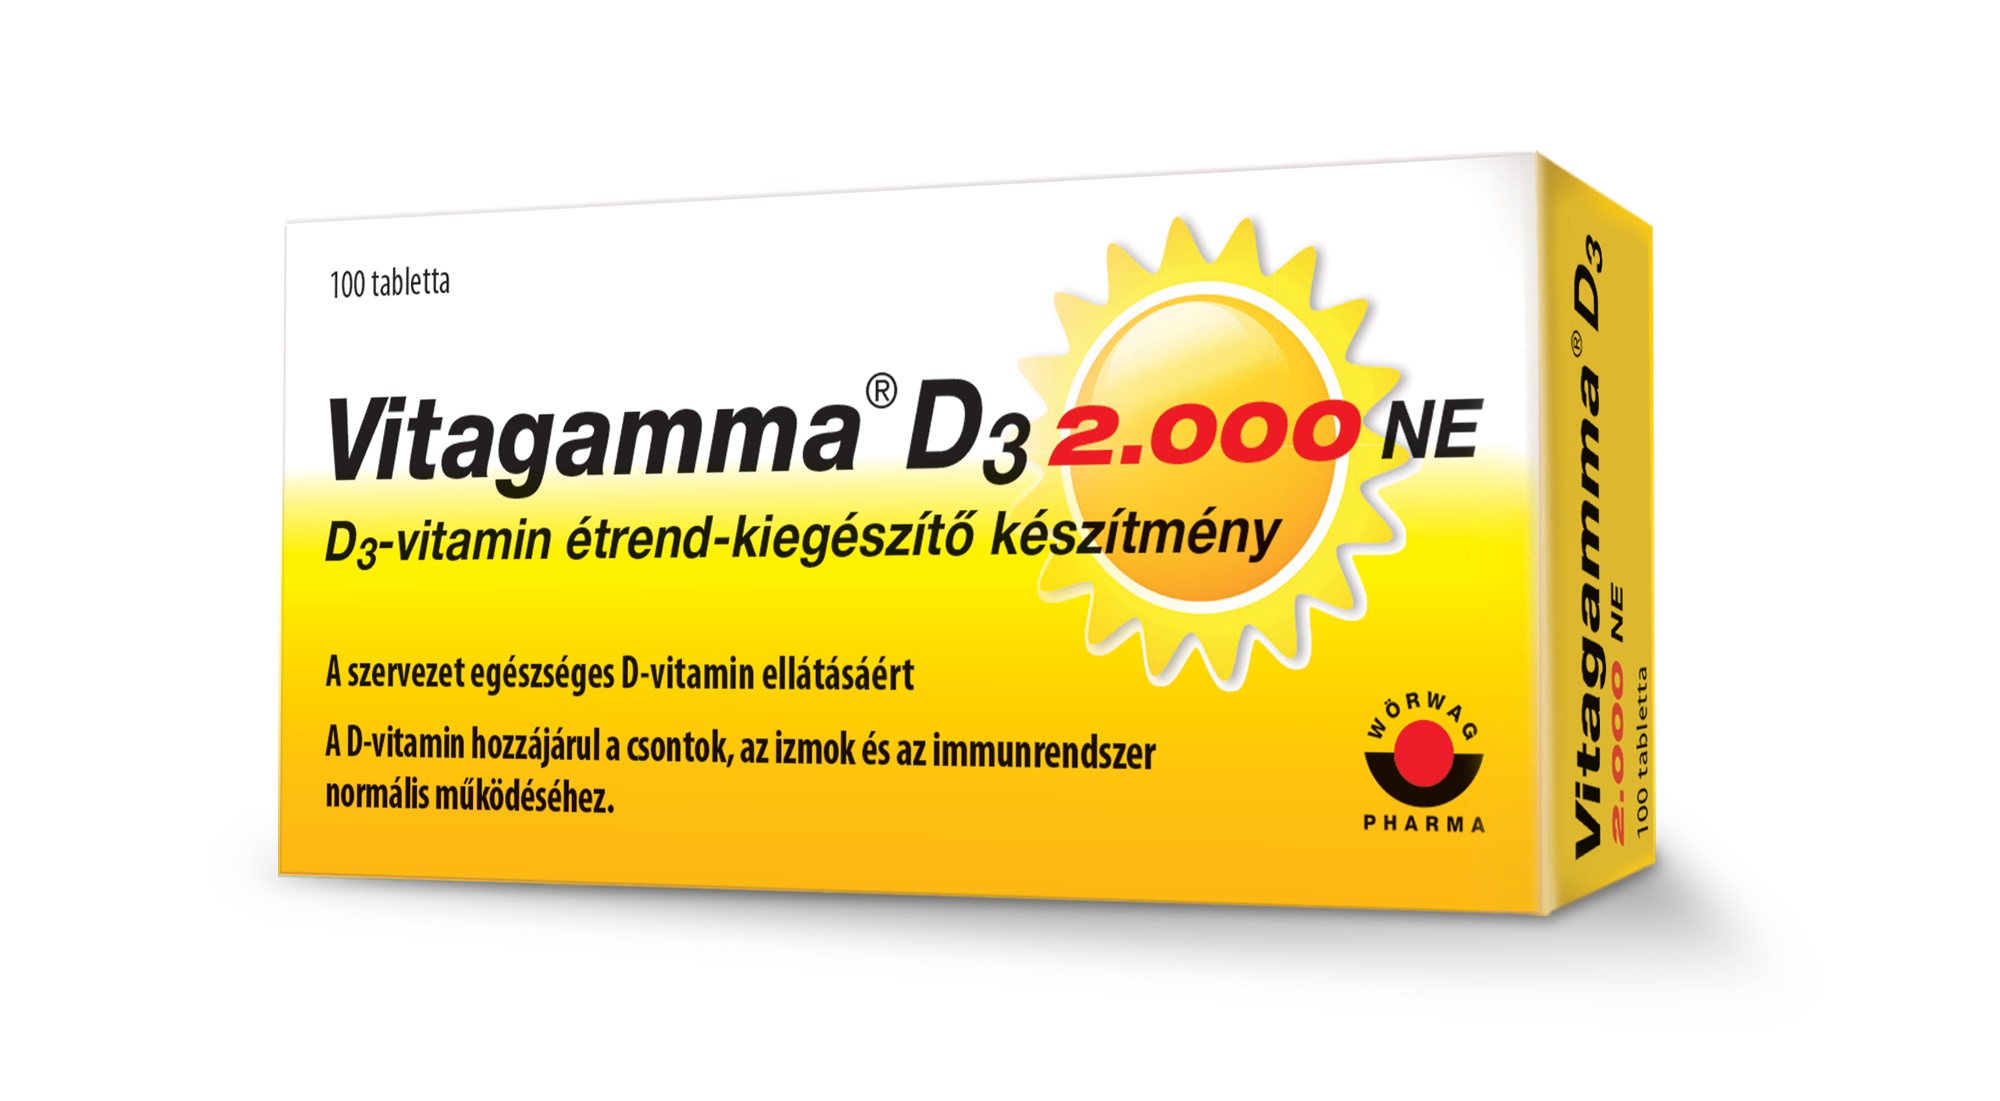 Vitagamma D3 vitamin 2000NE tabletta